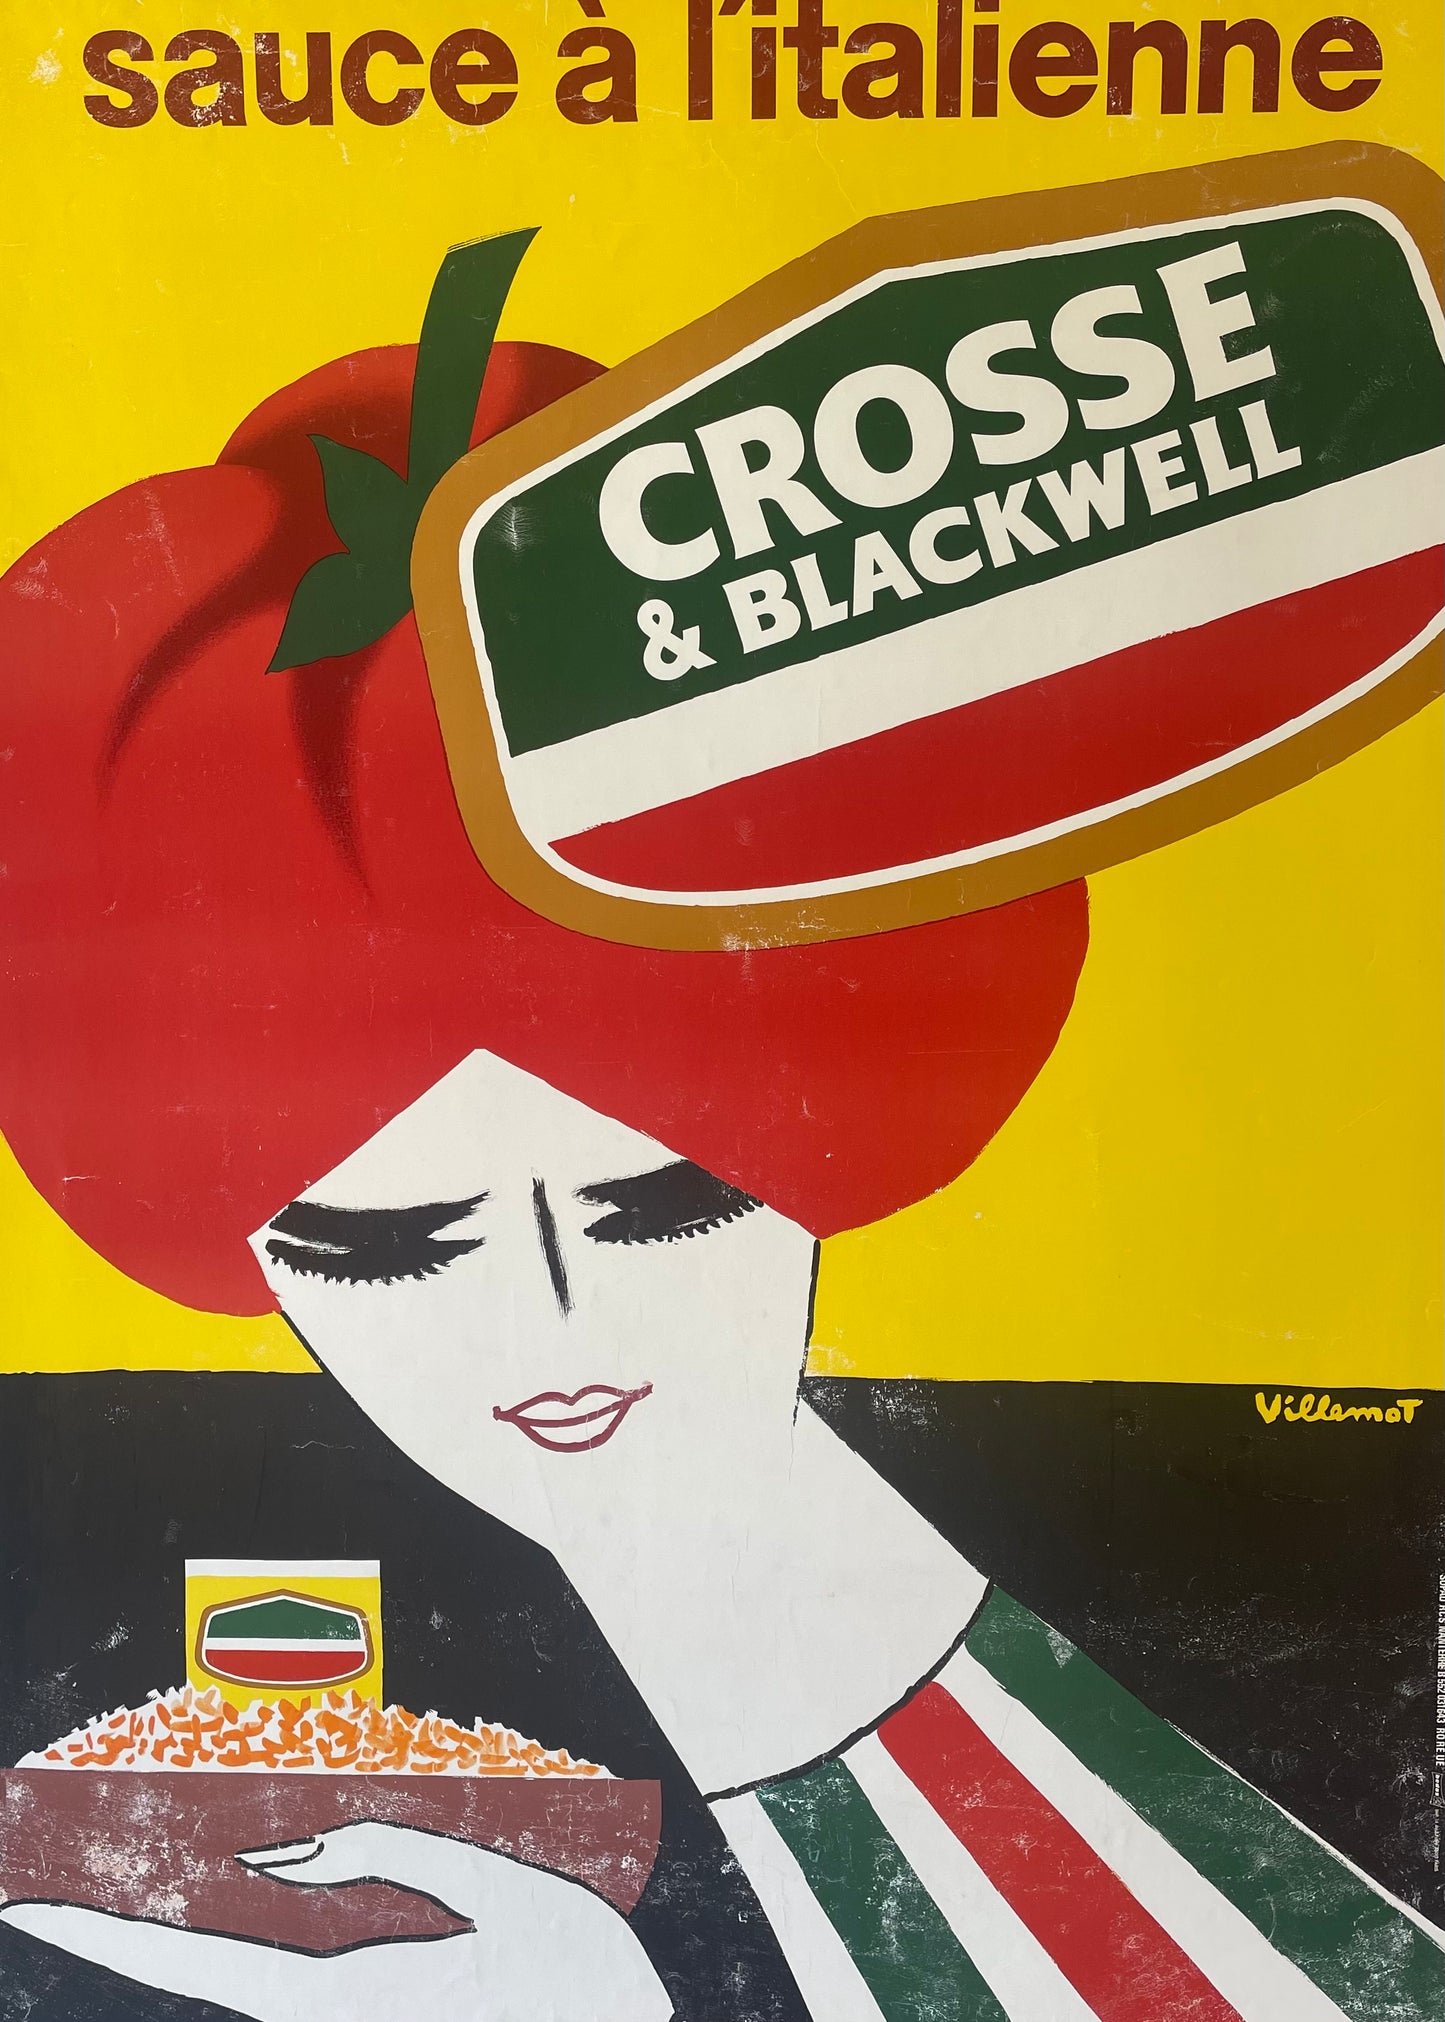 Crosse and Blackwell Tomato Sauce by Villemot